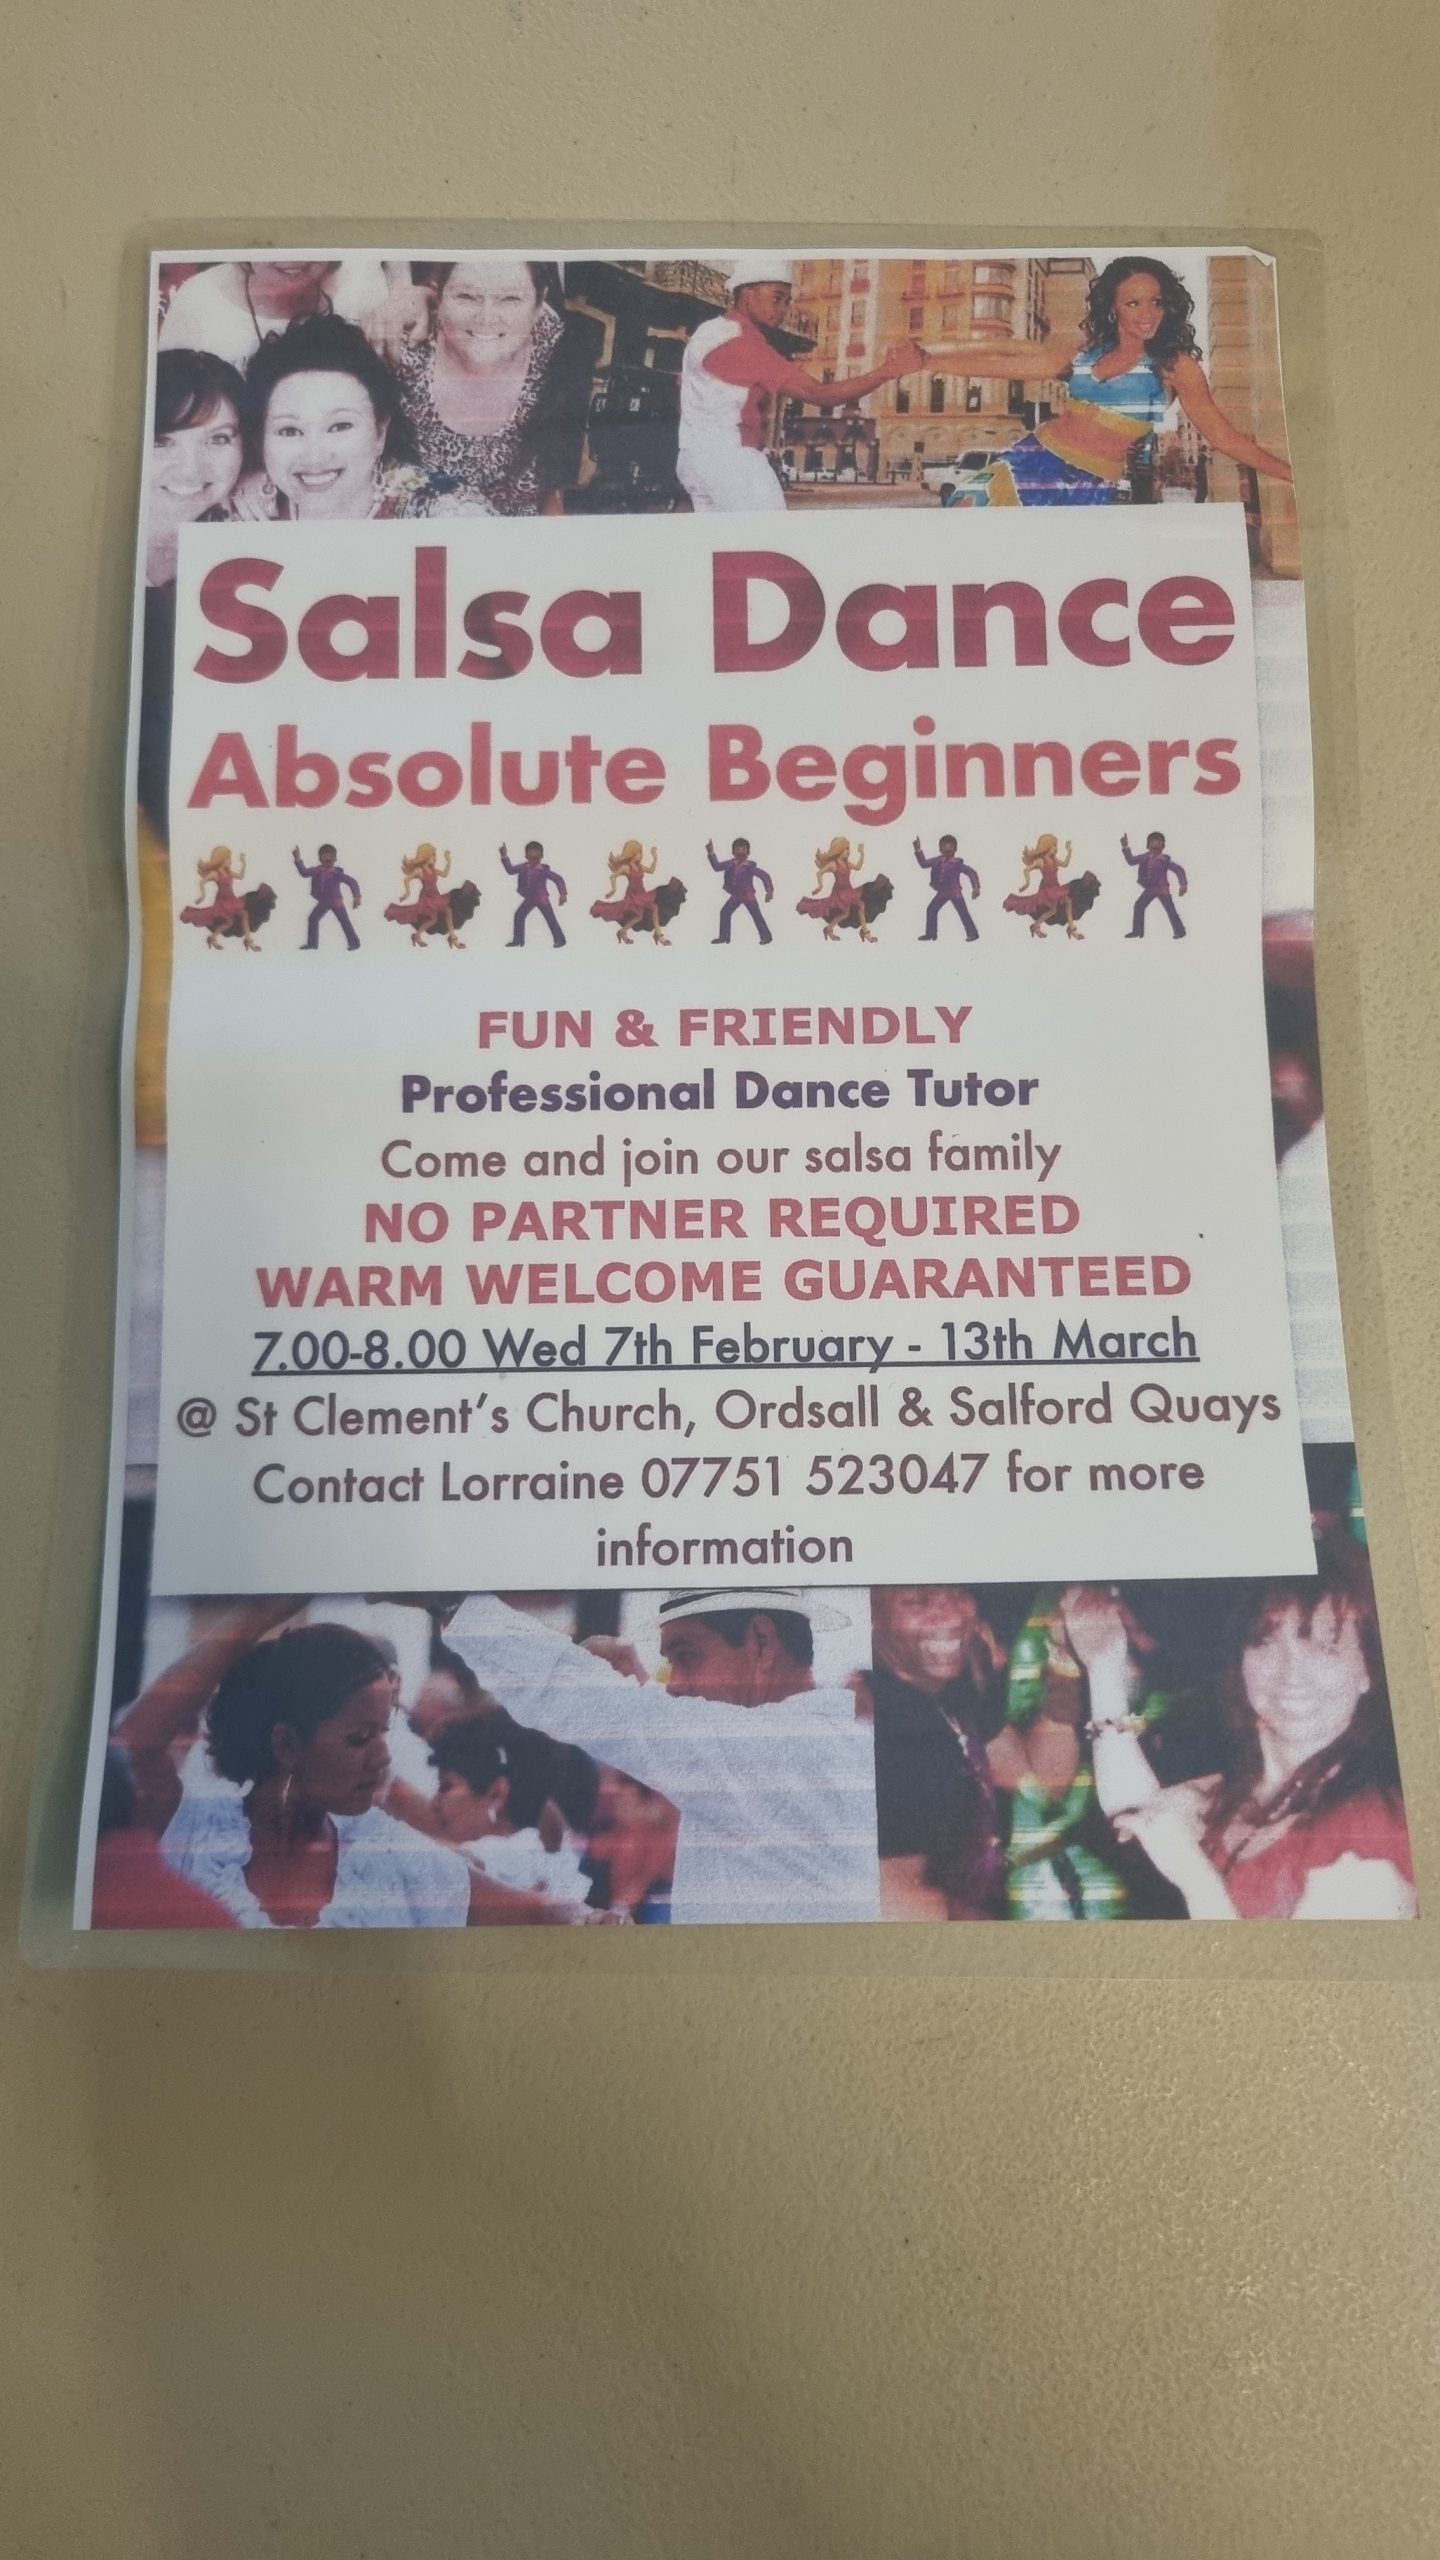 Salsa dancers practice classes leaflet, taken by me.